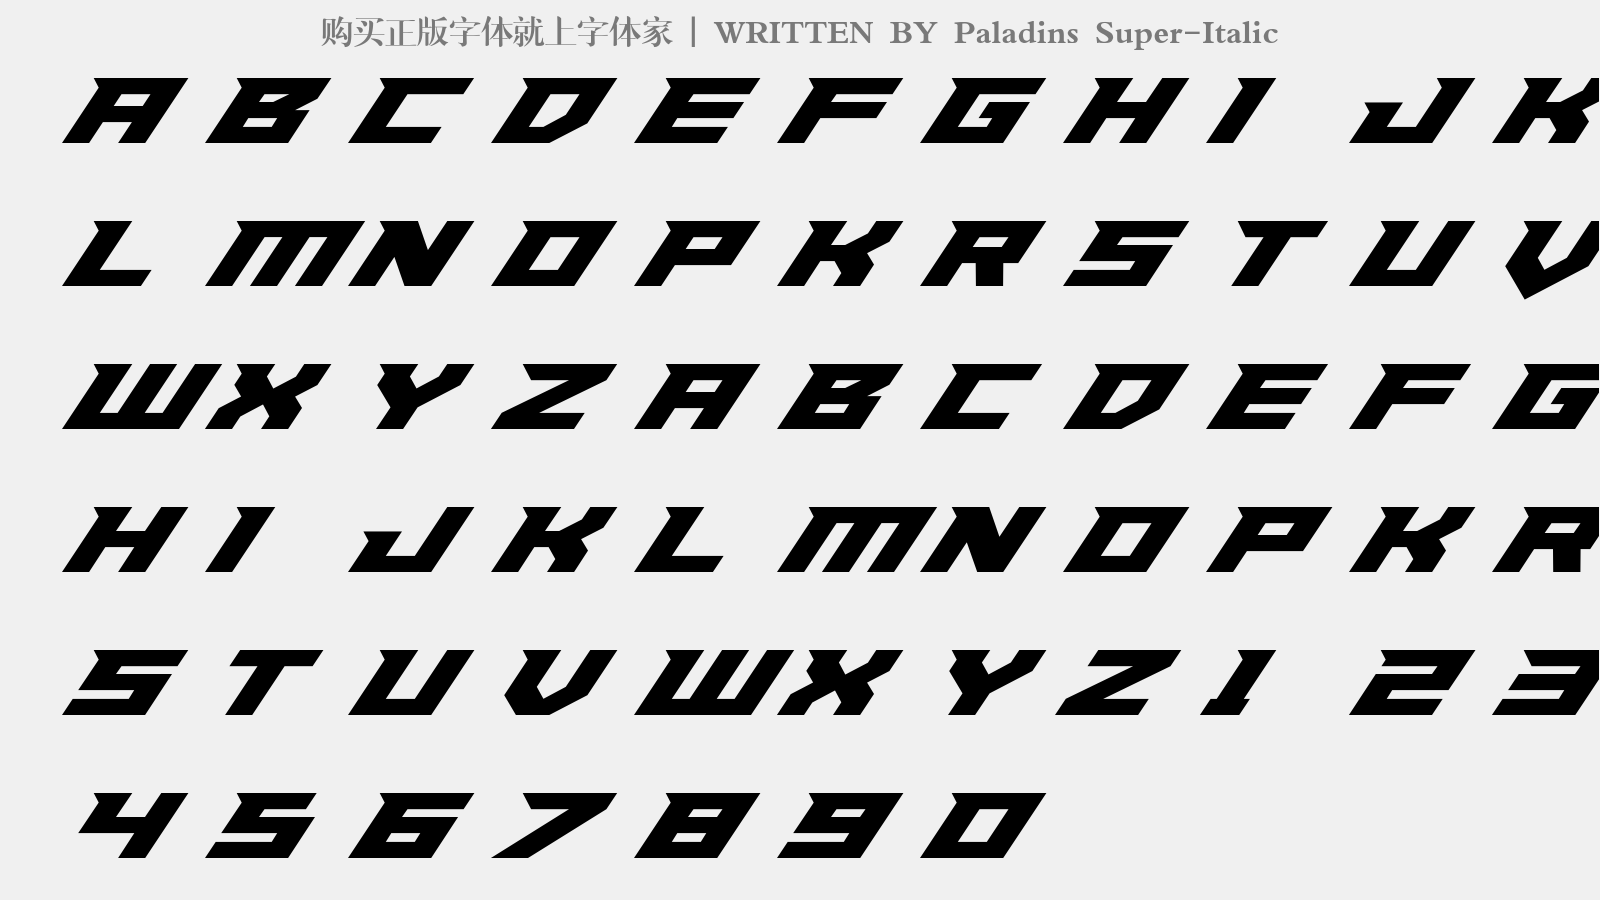 Paladins Super-Italic - 大写字母/小写字母/数字